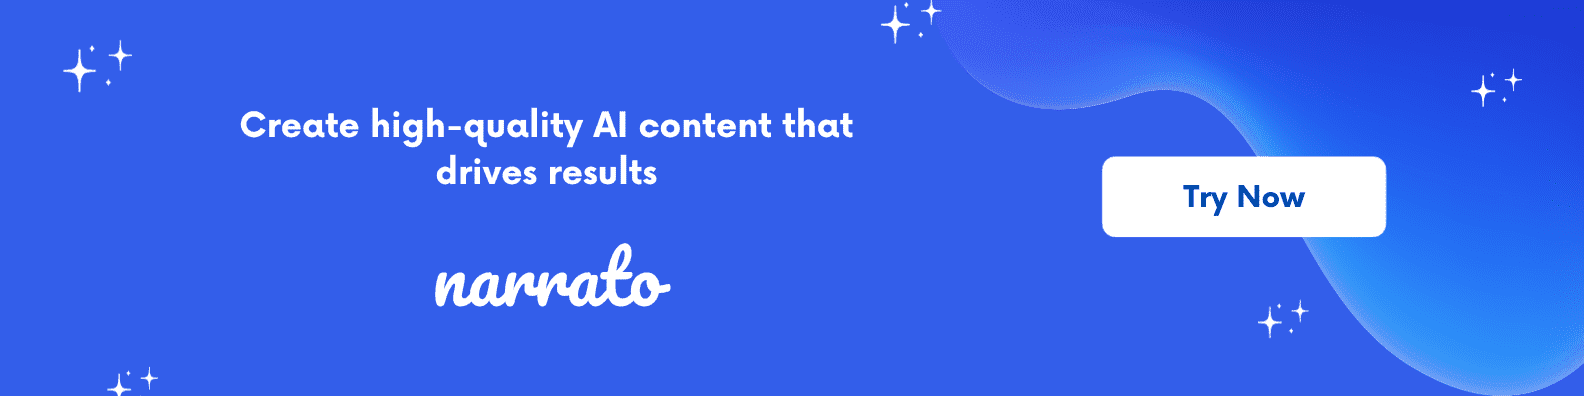 Narrato AI content creation and marketing platform